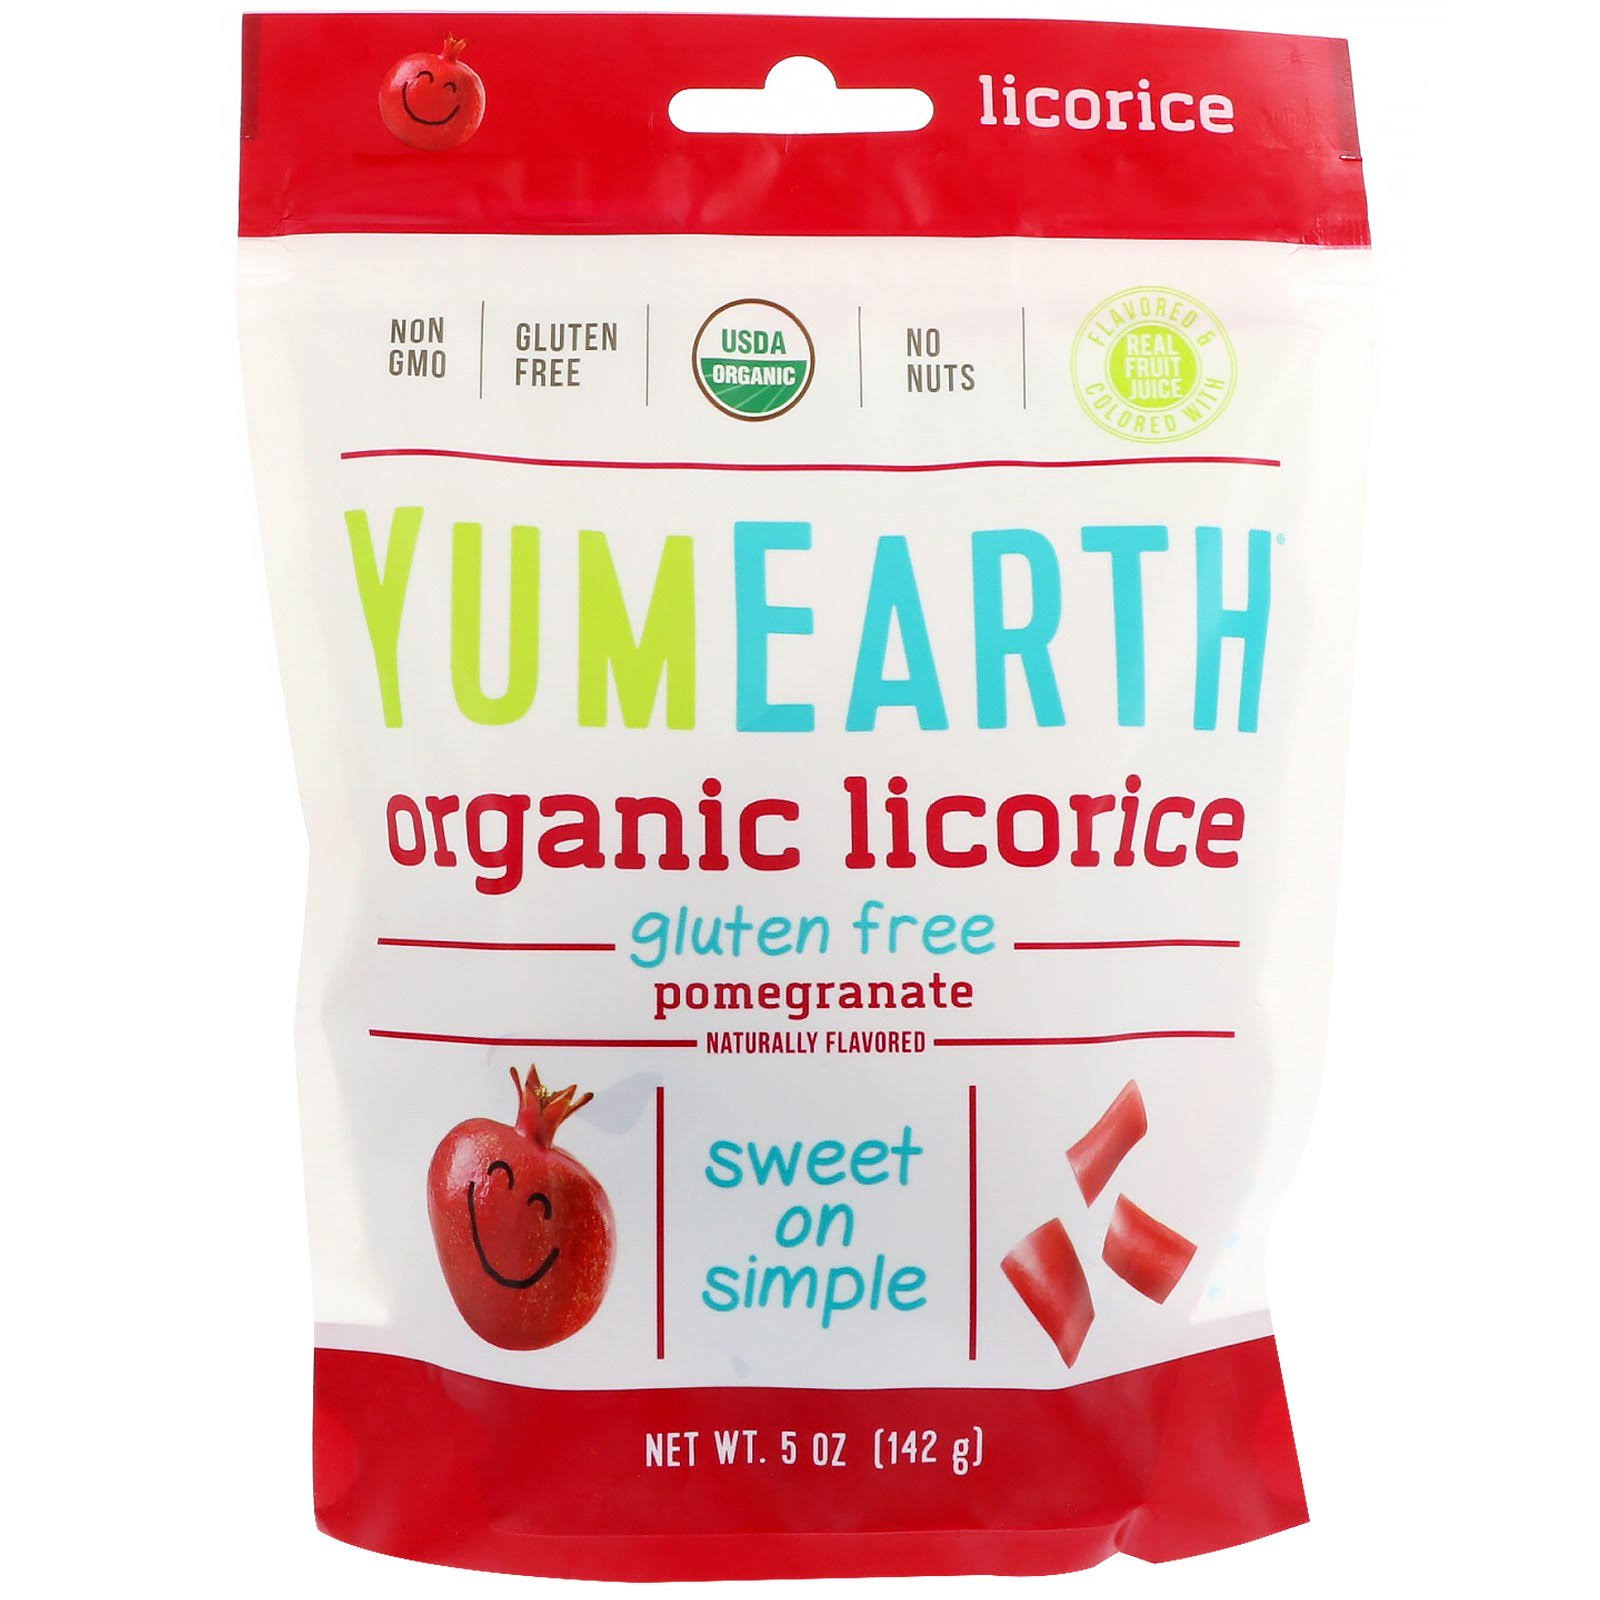 Yumearth Licorice - Pomegranate, 142g